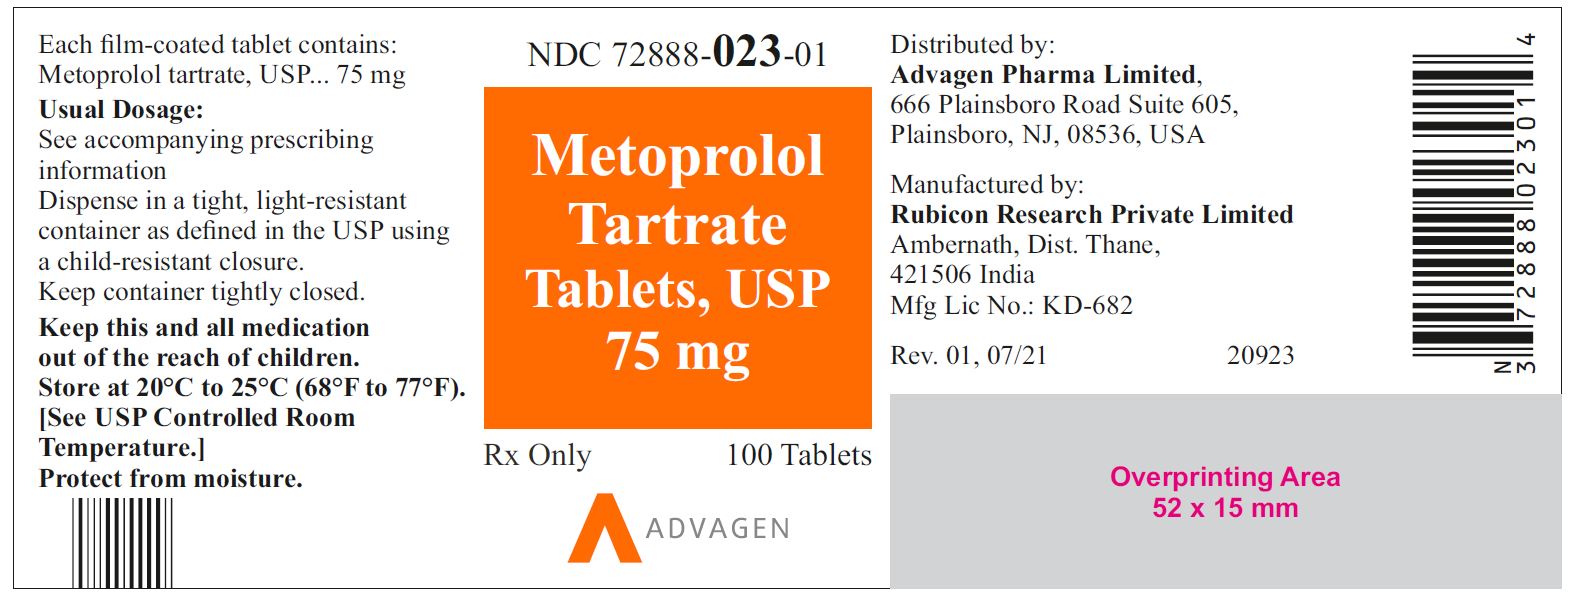 NDC: <a href=/NDC/72888-023-01>72888-023-01</a> - Metoprolol Tartrate Tablets, USP 75 mg - 100 Tablets